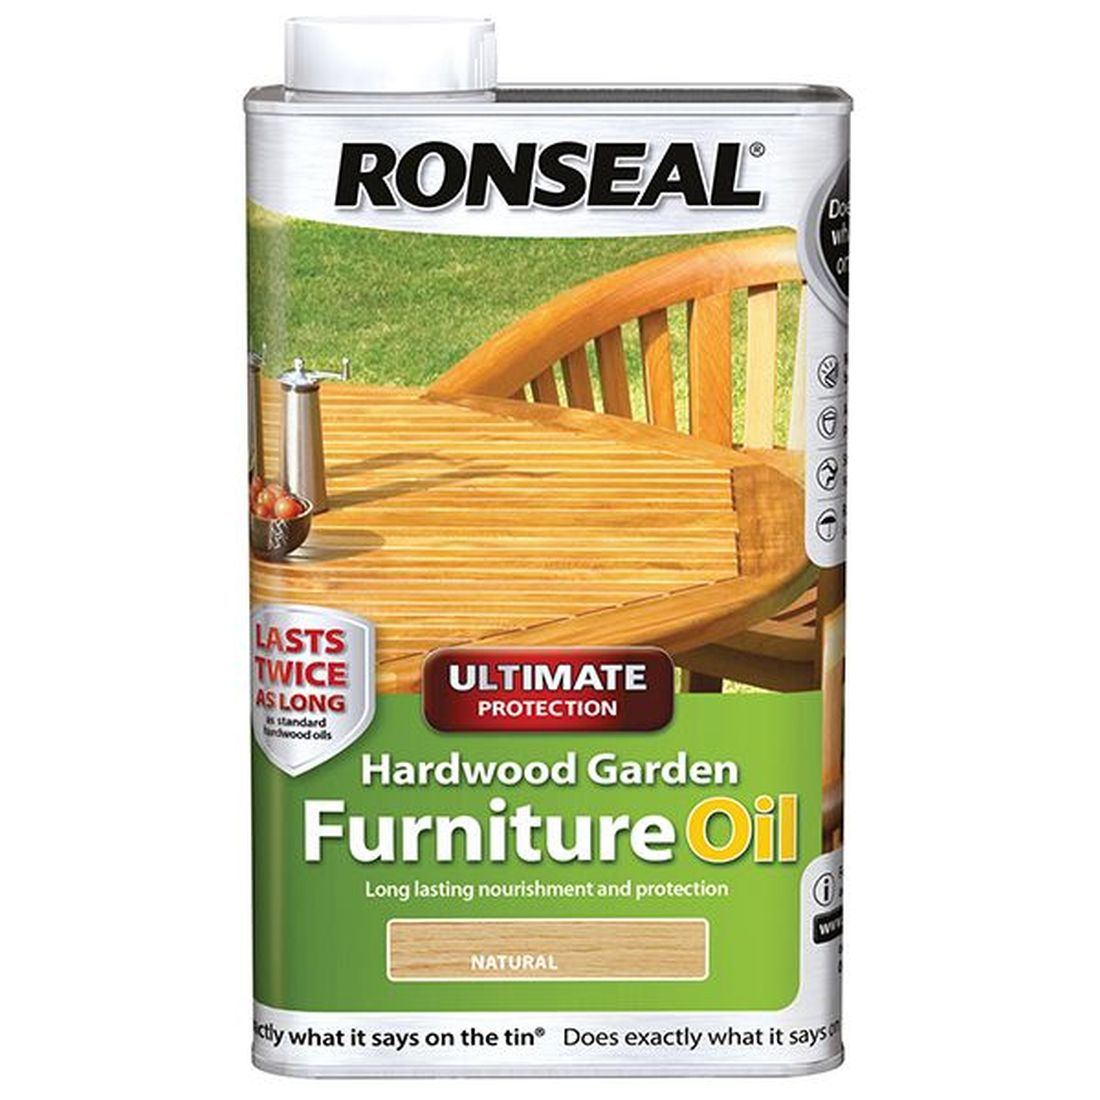 Ronseal Ultimate Protection Hardwood Garden Furniture Oil Natural 1 litre               